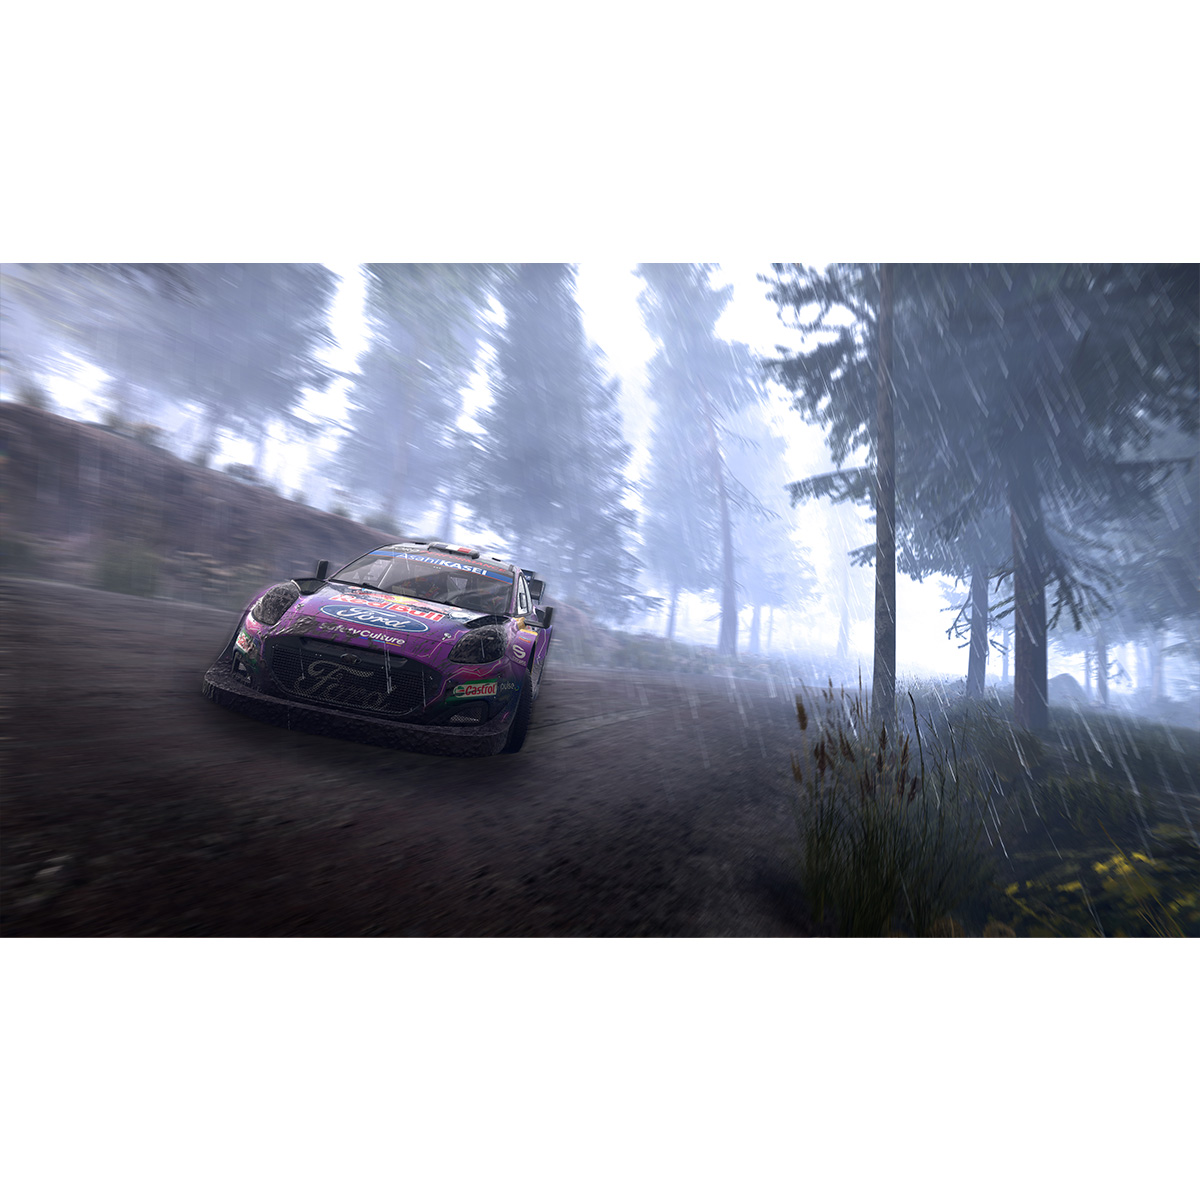 ［PS4］ WRCジェネレーションズ